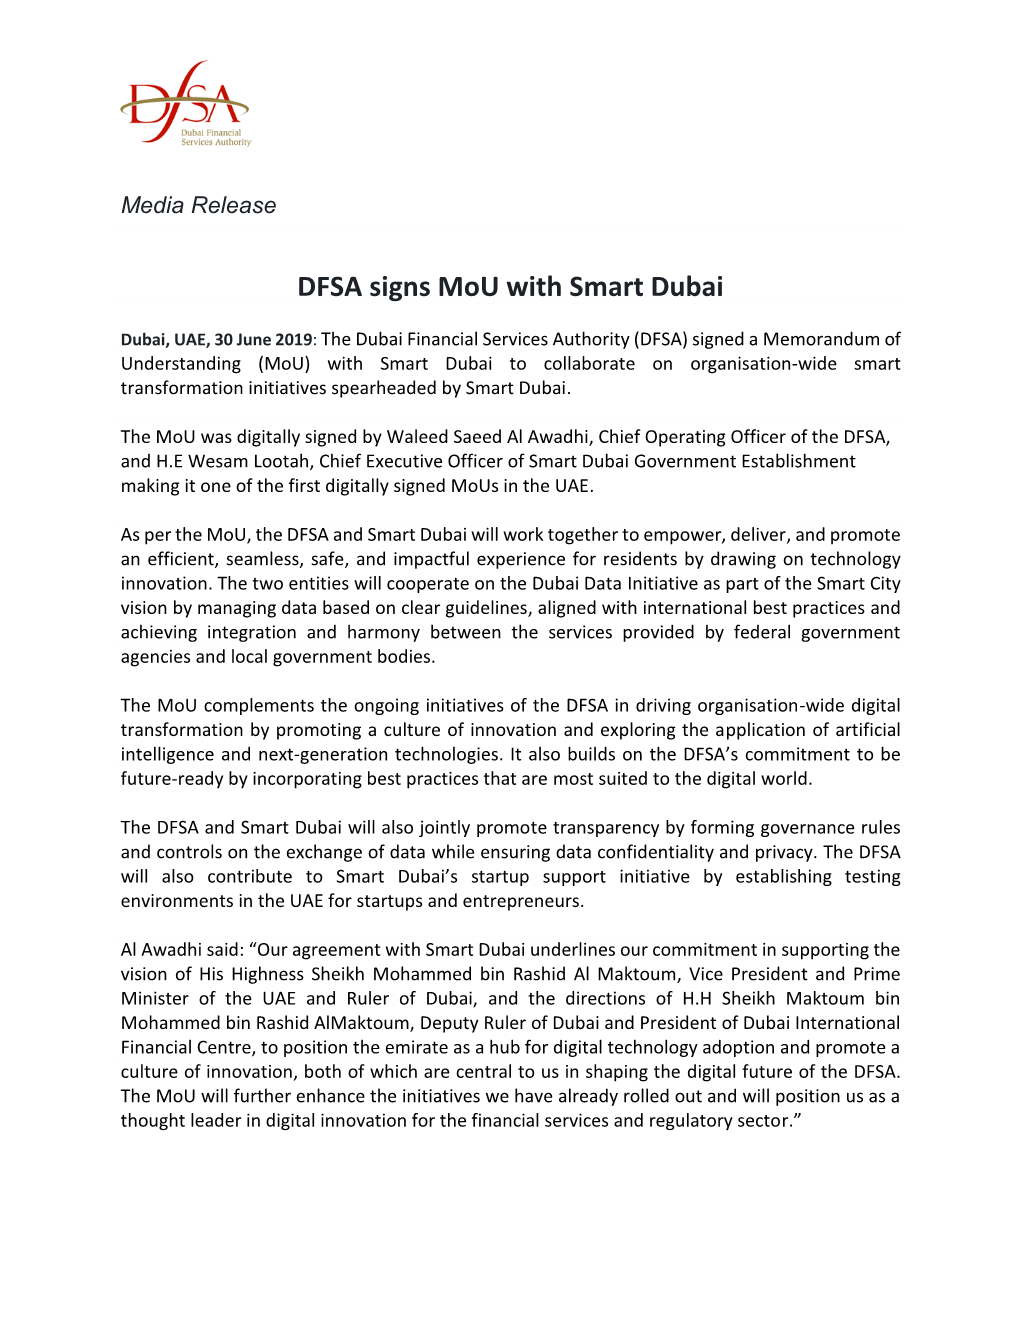 DFSA Signs Mou with Smart Dubai